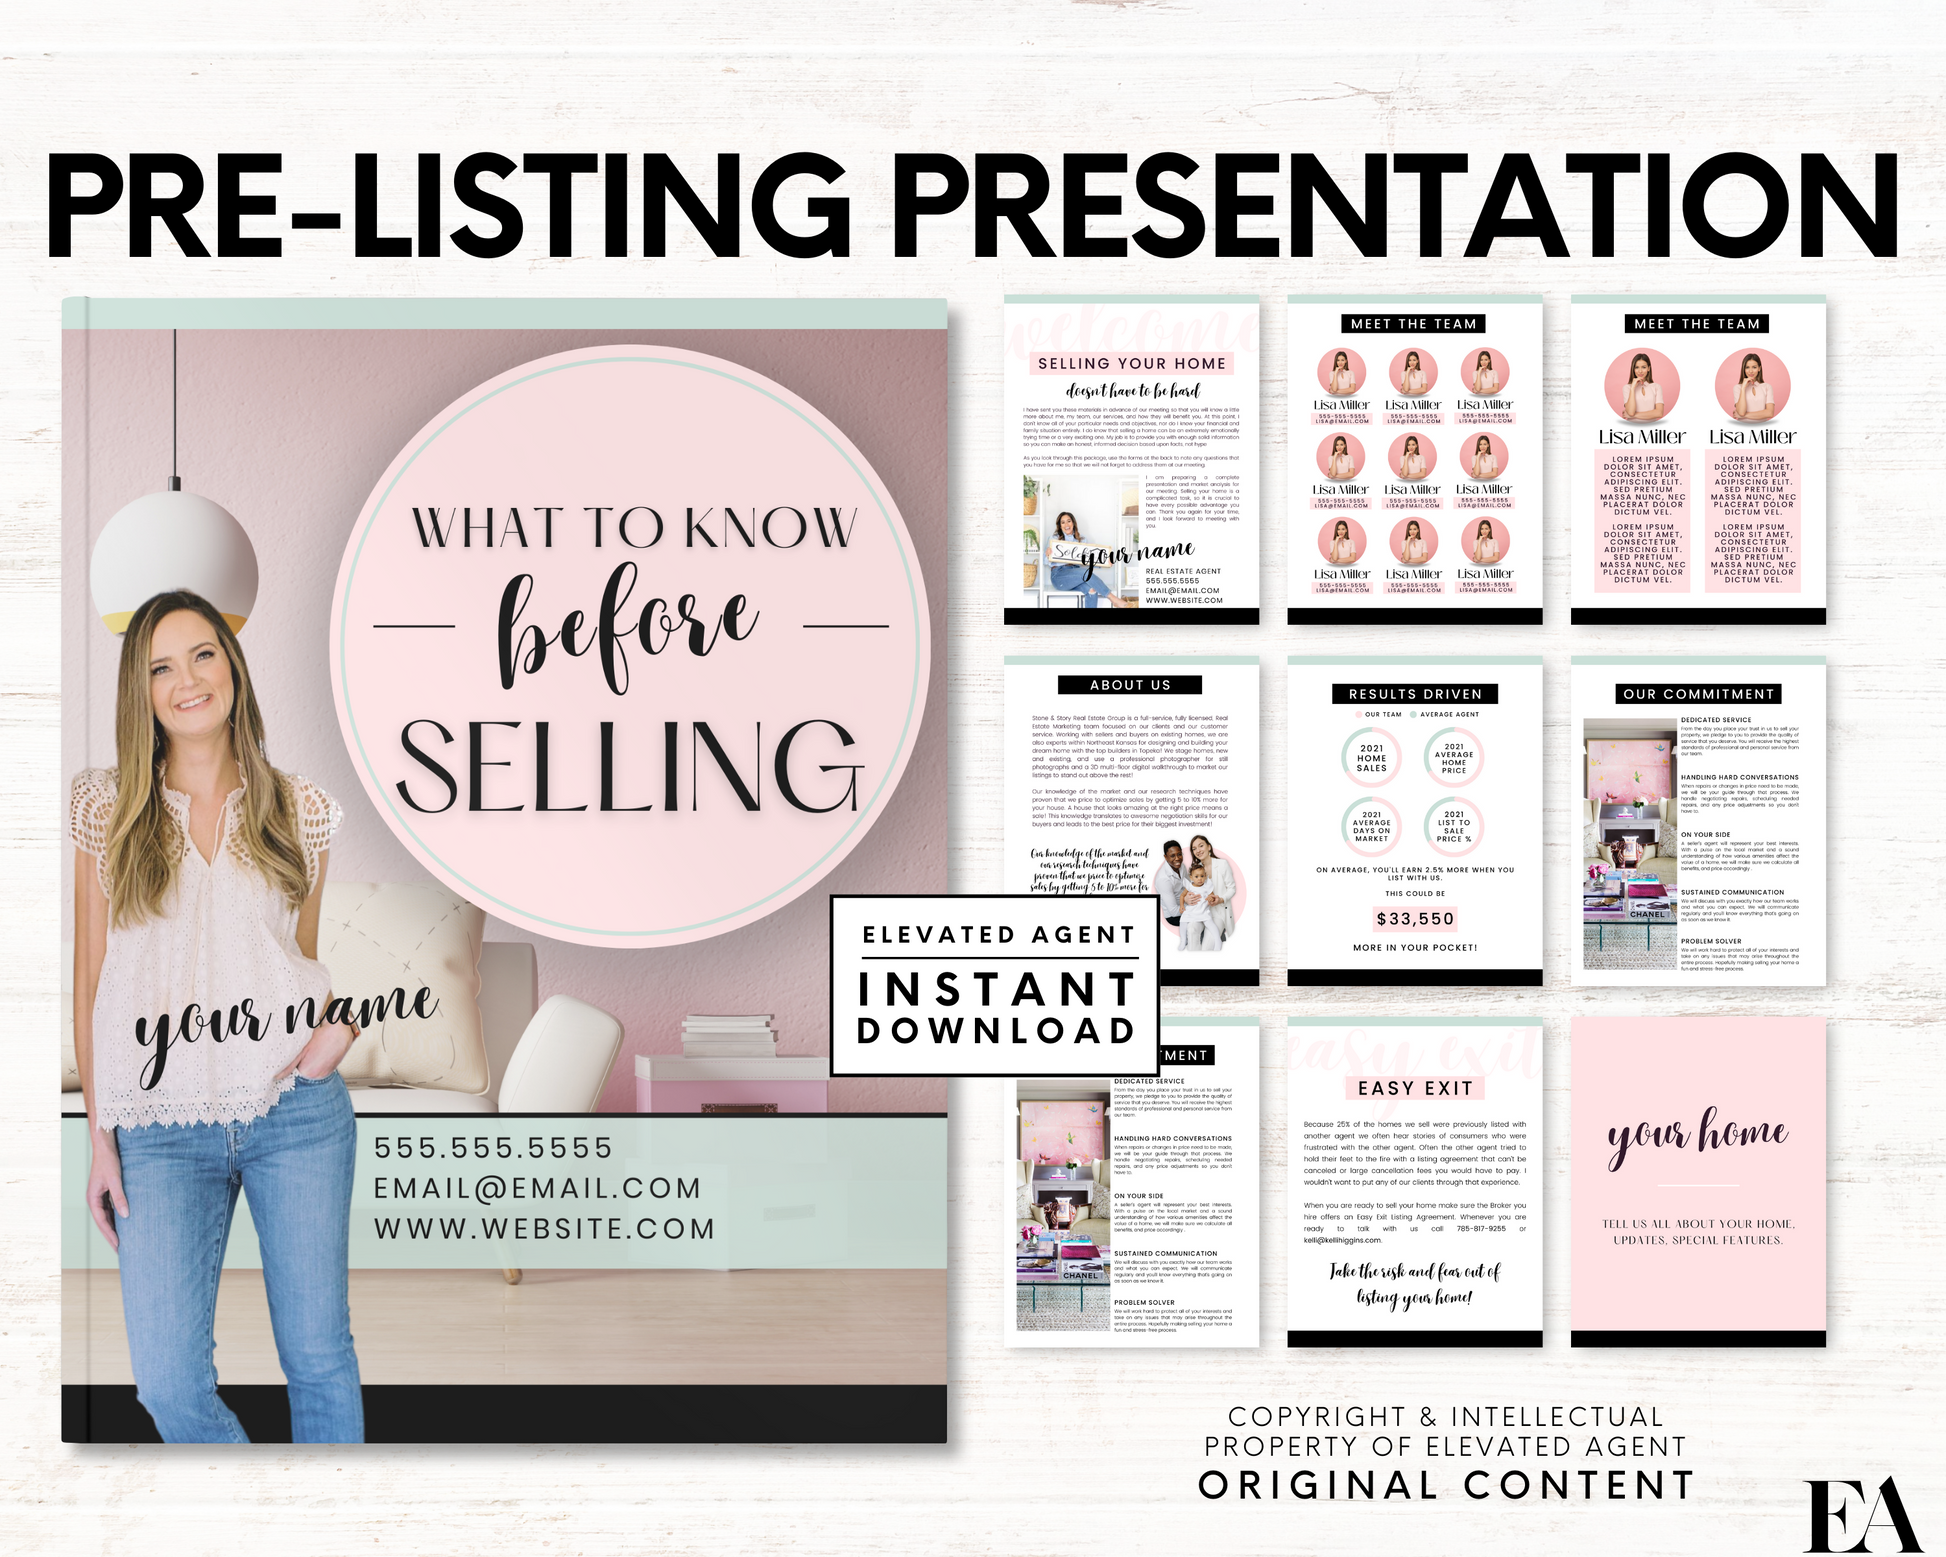 Seller Pre-Listing Presentation - Playful